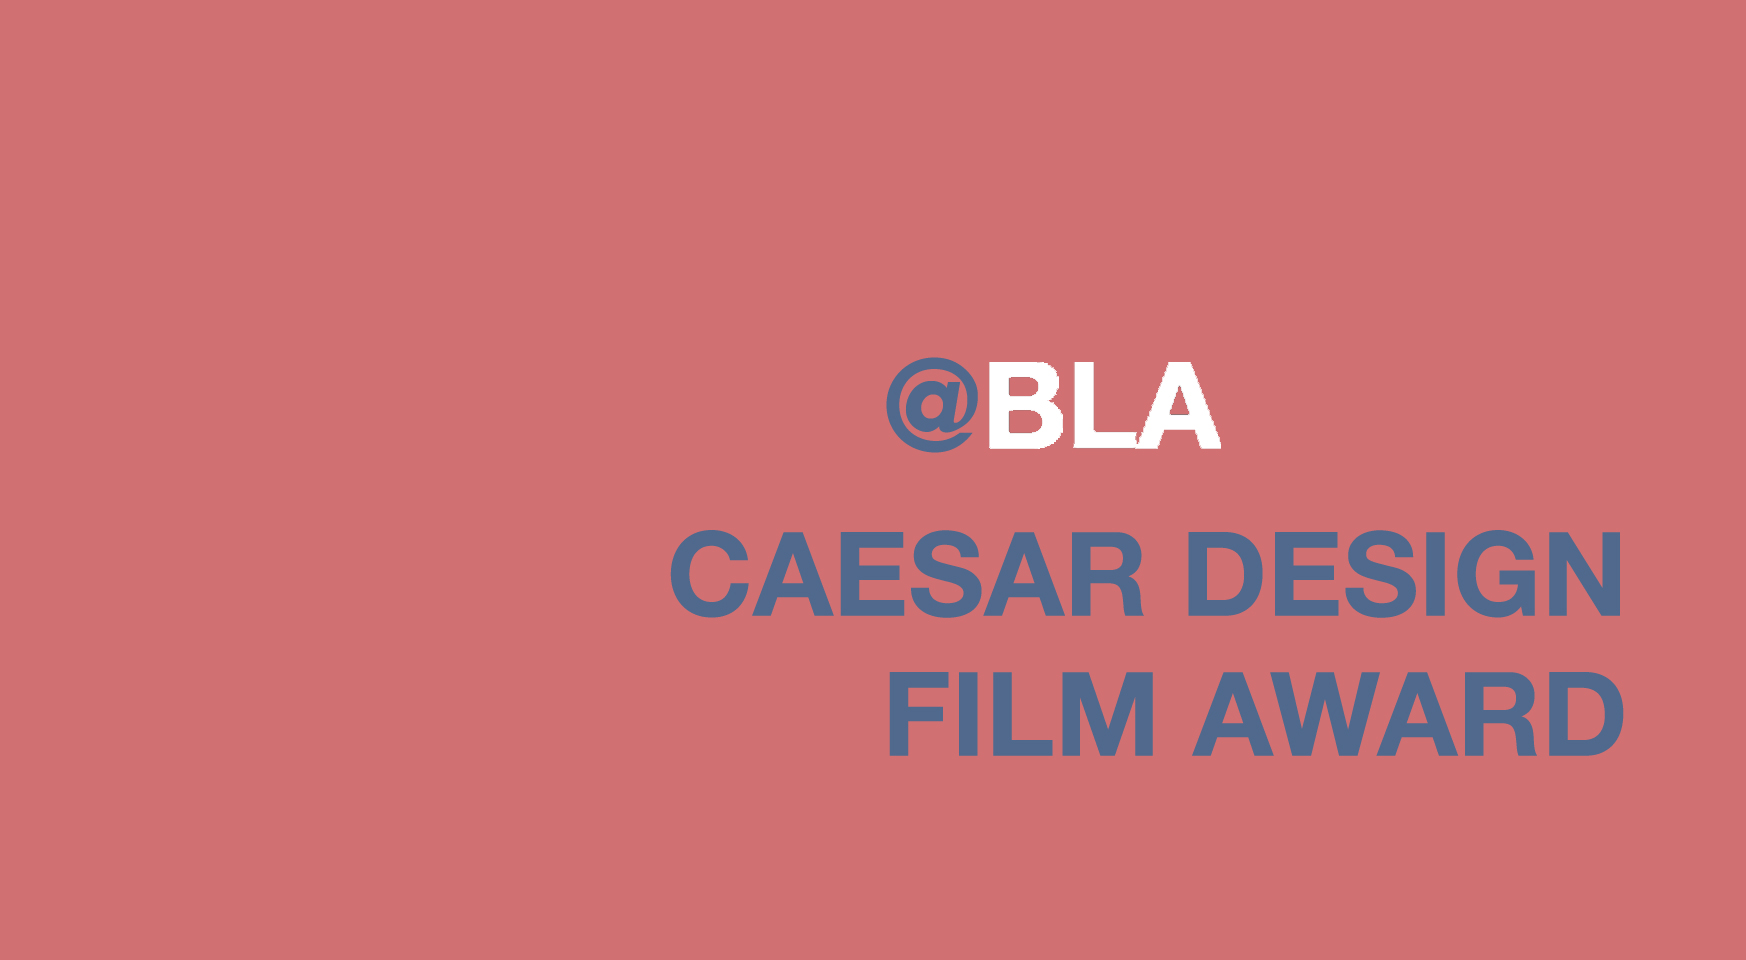 Caesar Design Film Award - EFF 2021 @ BLA